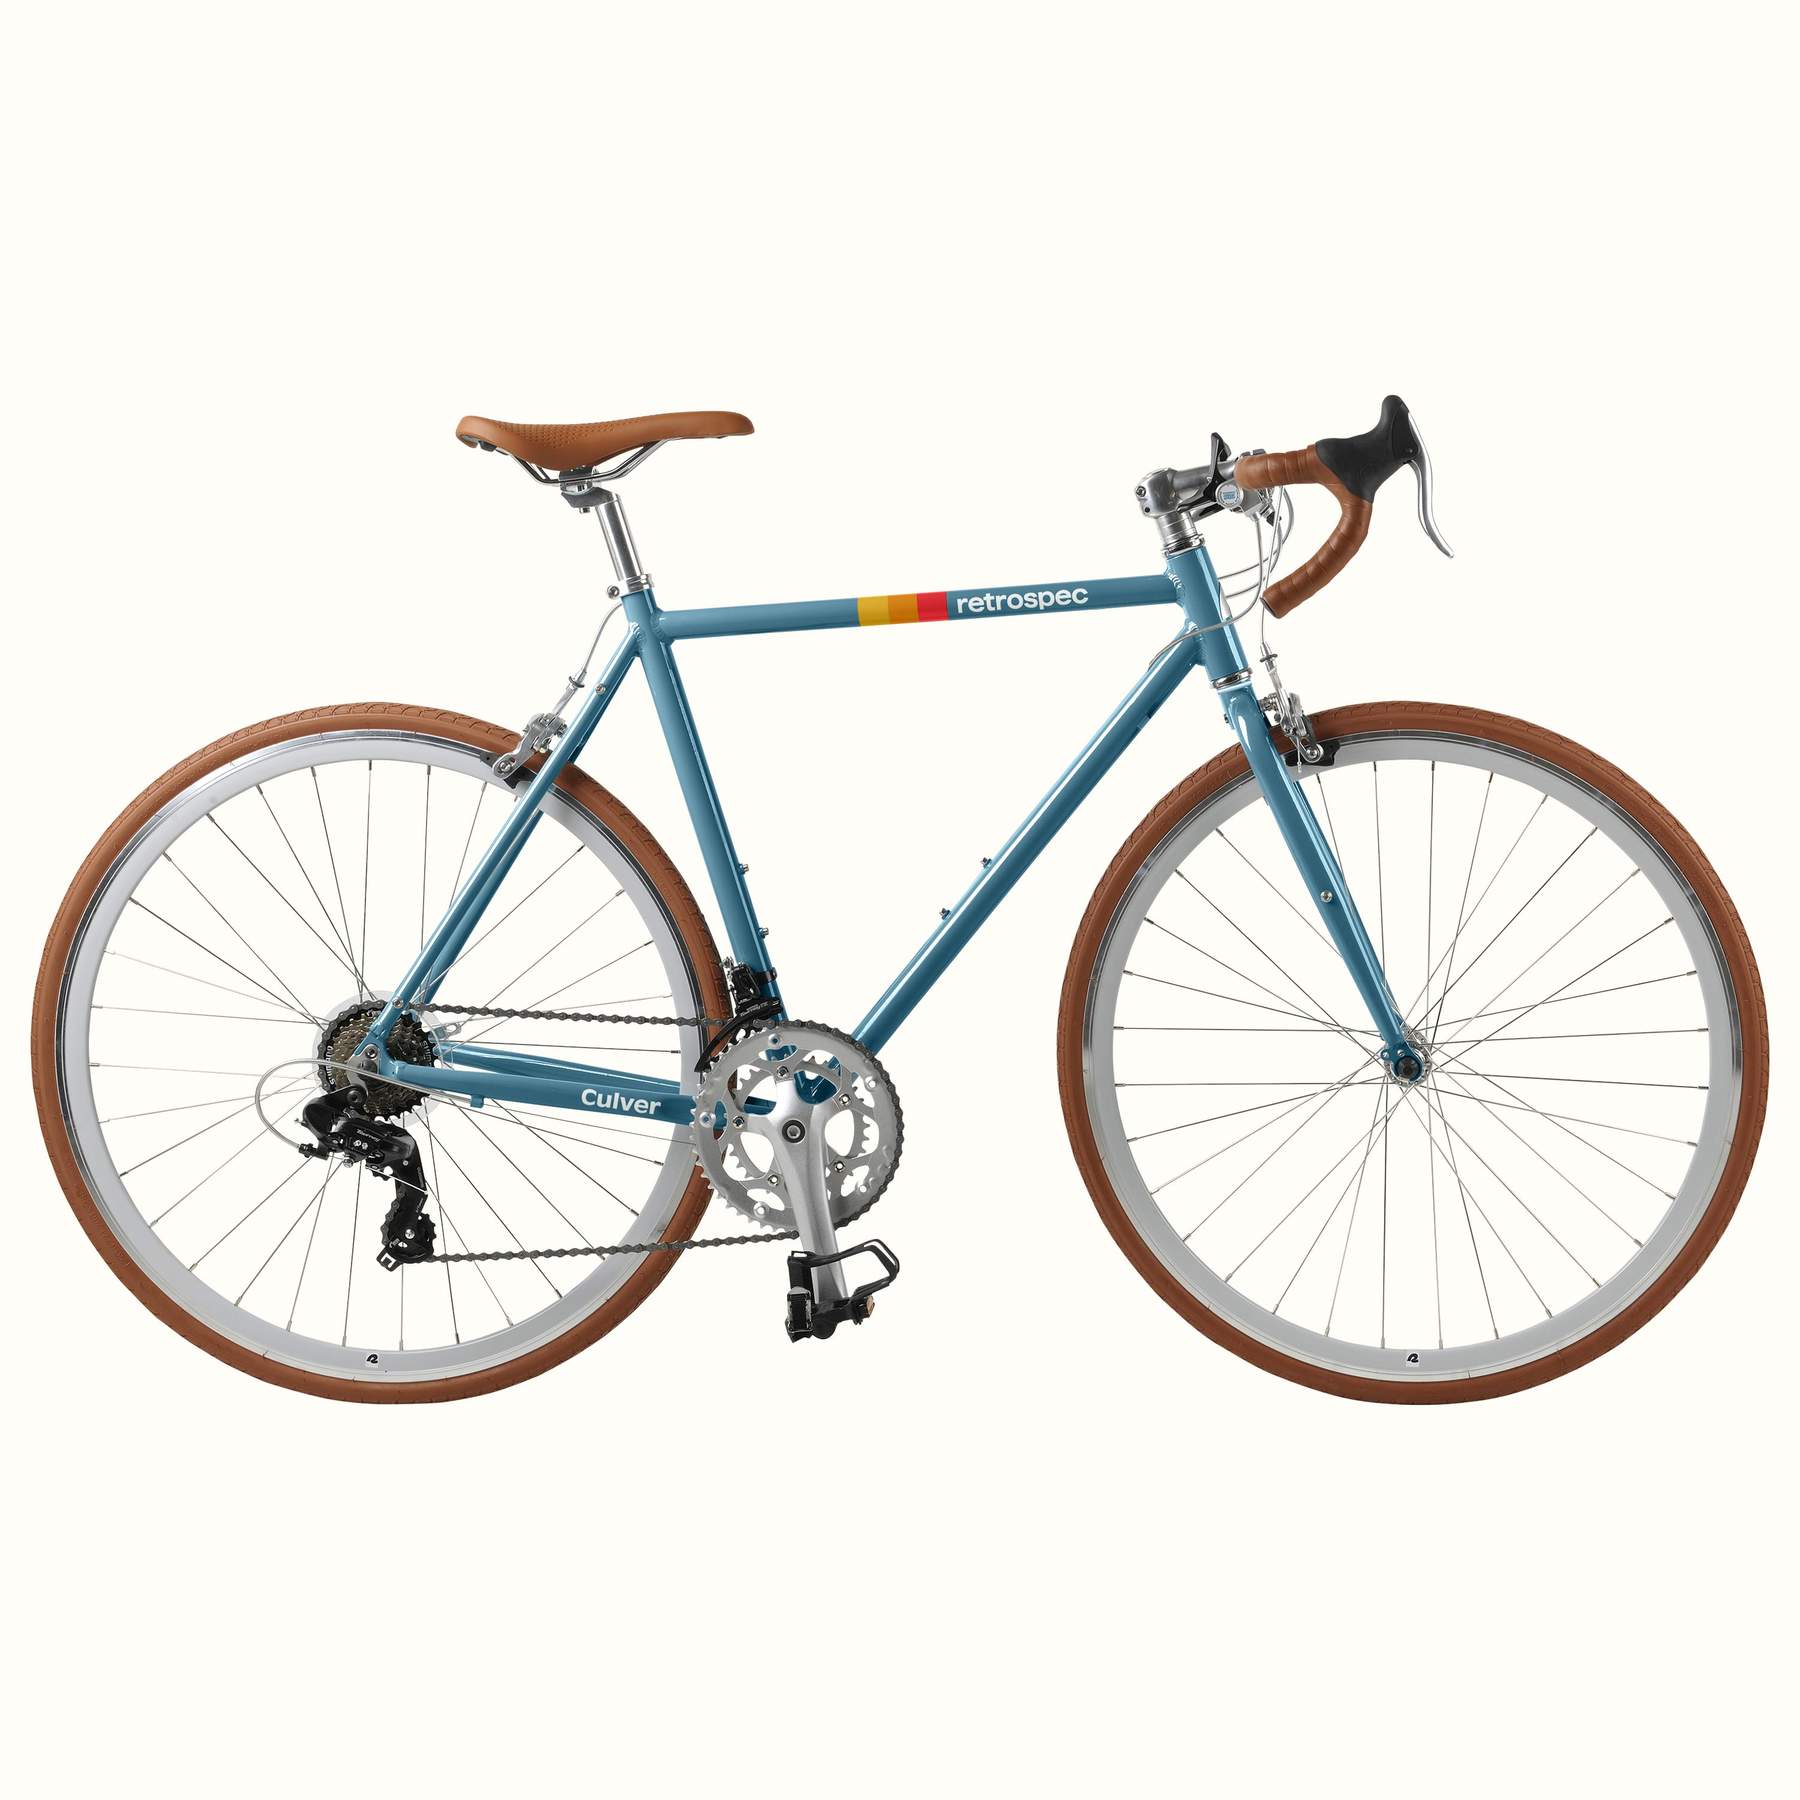 Culver Road Bike - 14 Speed - Coastal Blue